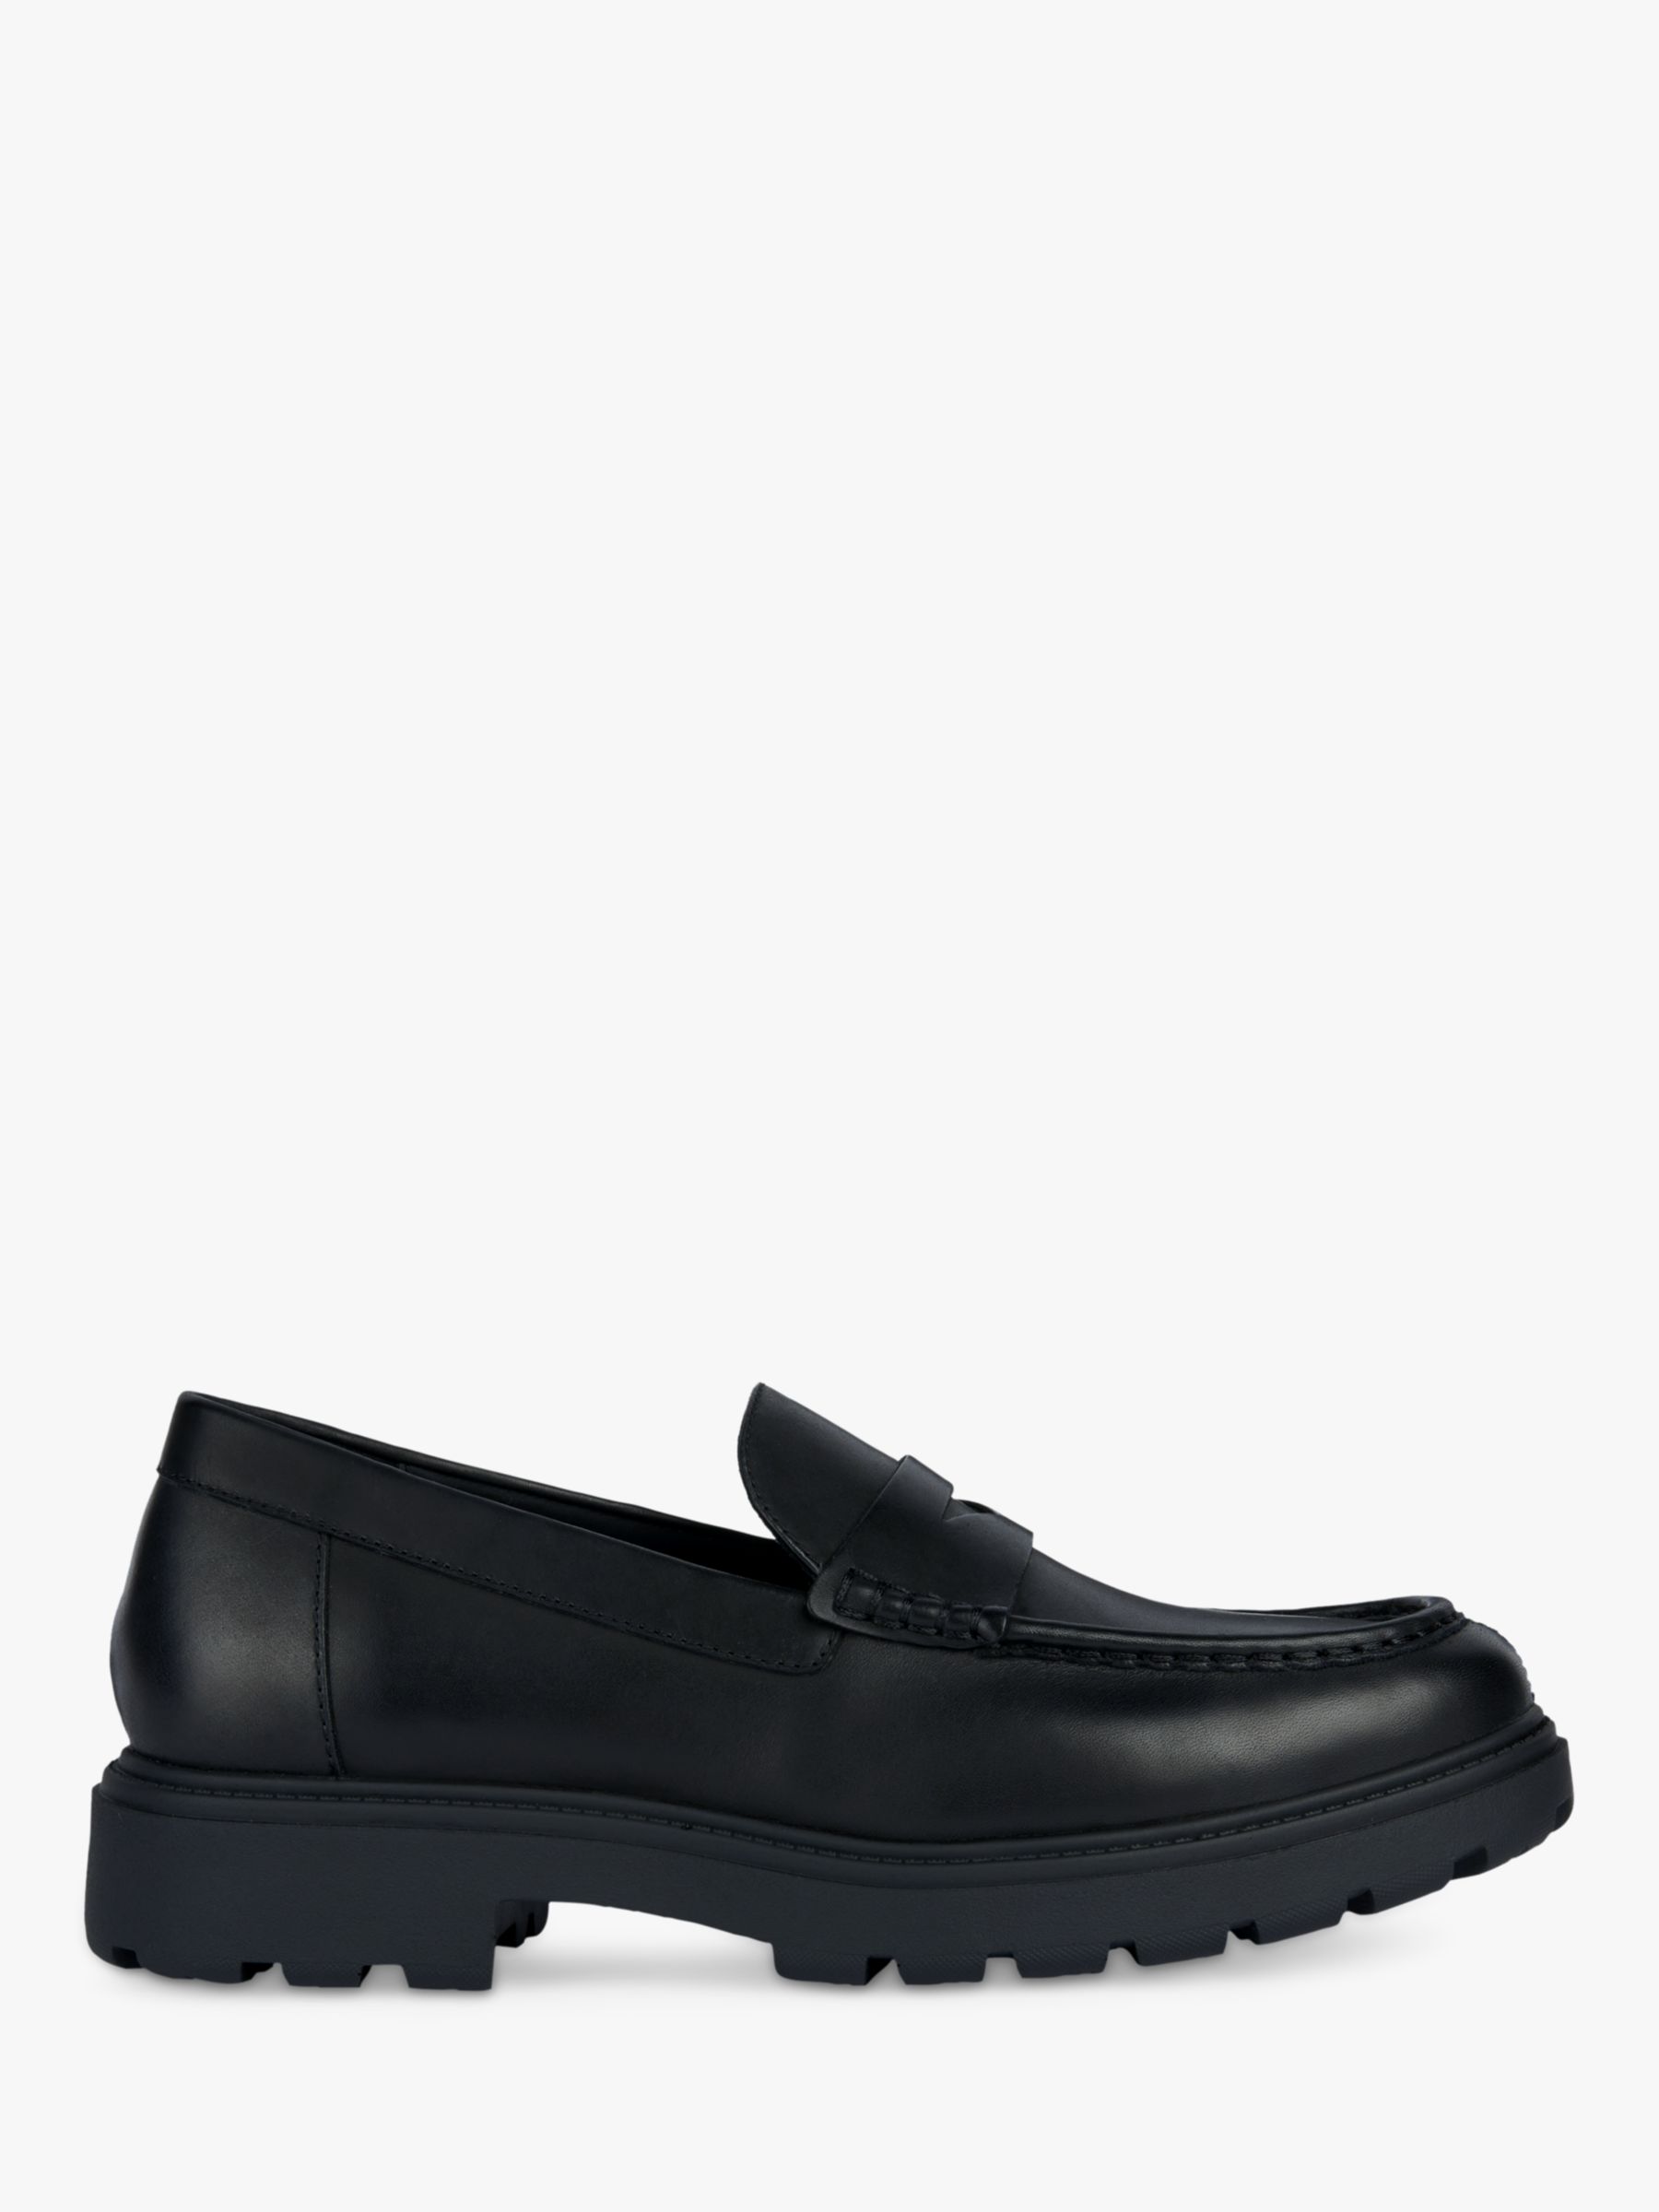 Geox Spherica Wide Fit EC7 Leather Loafers, Black, 6